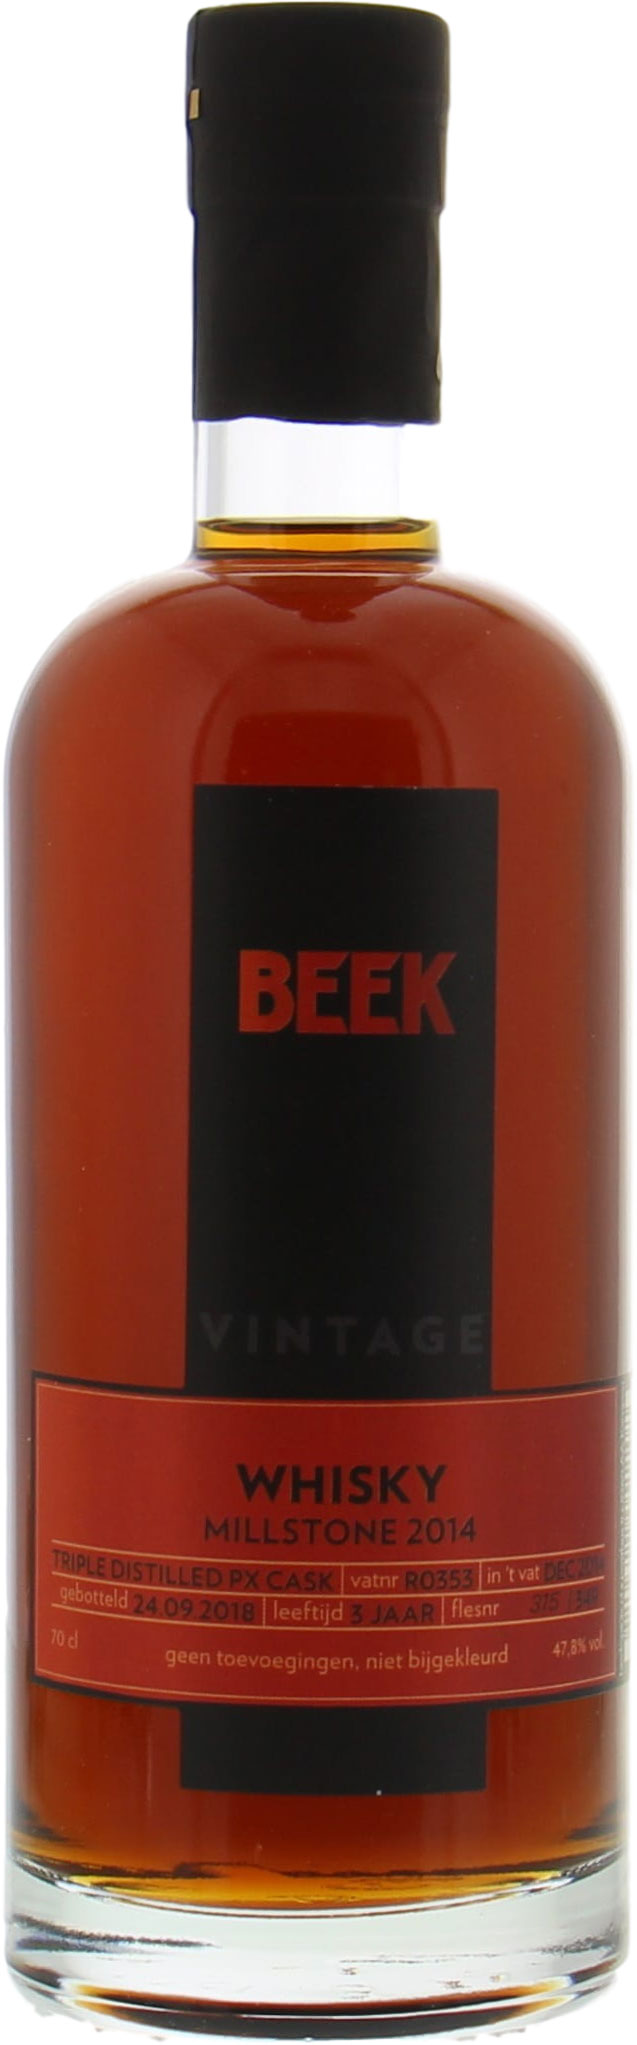 Millstone - Beek Triple Distilled 3 Years Old PX Cask R0353 47.8% 2014 Perfect